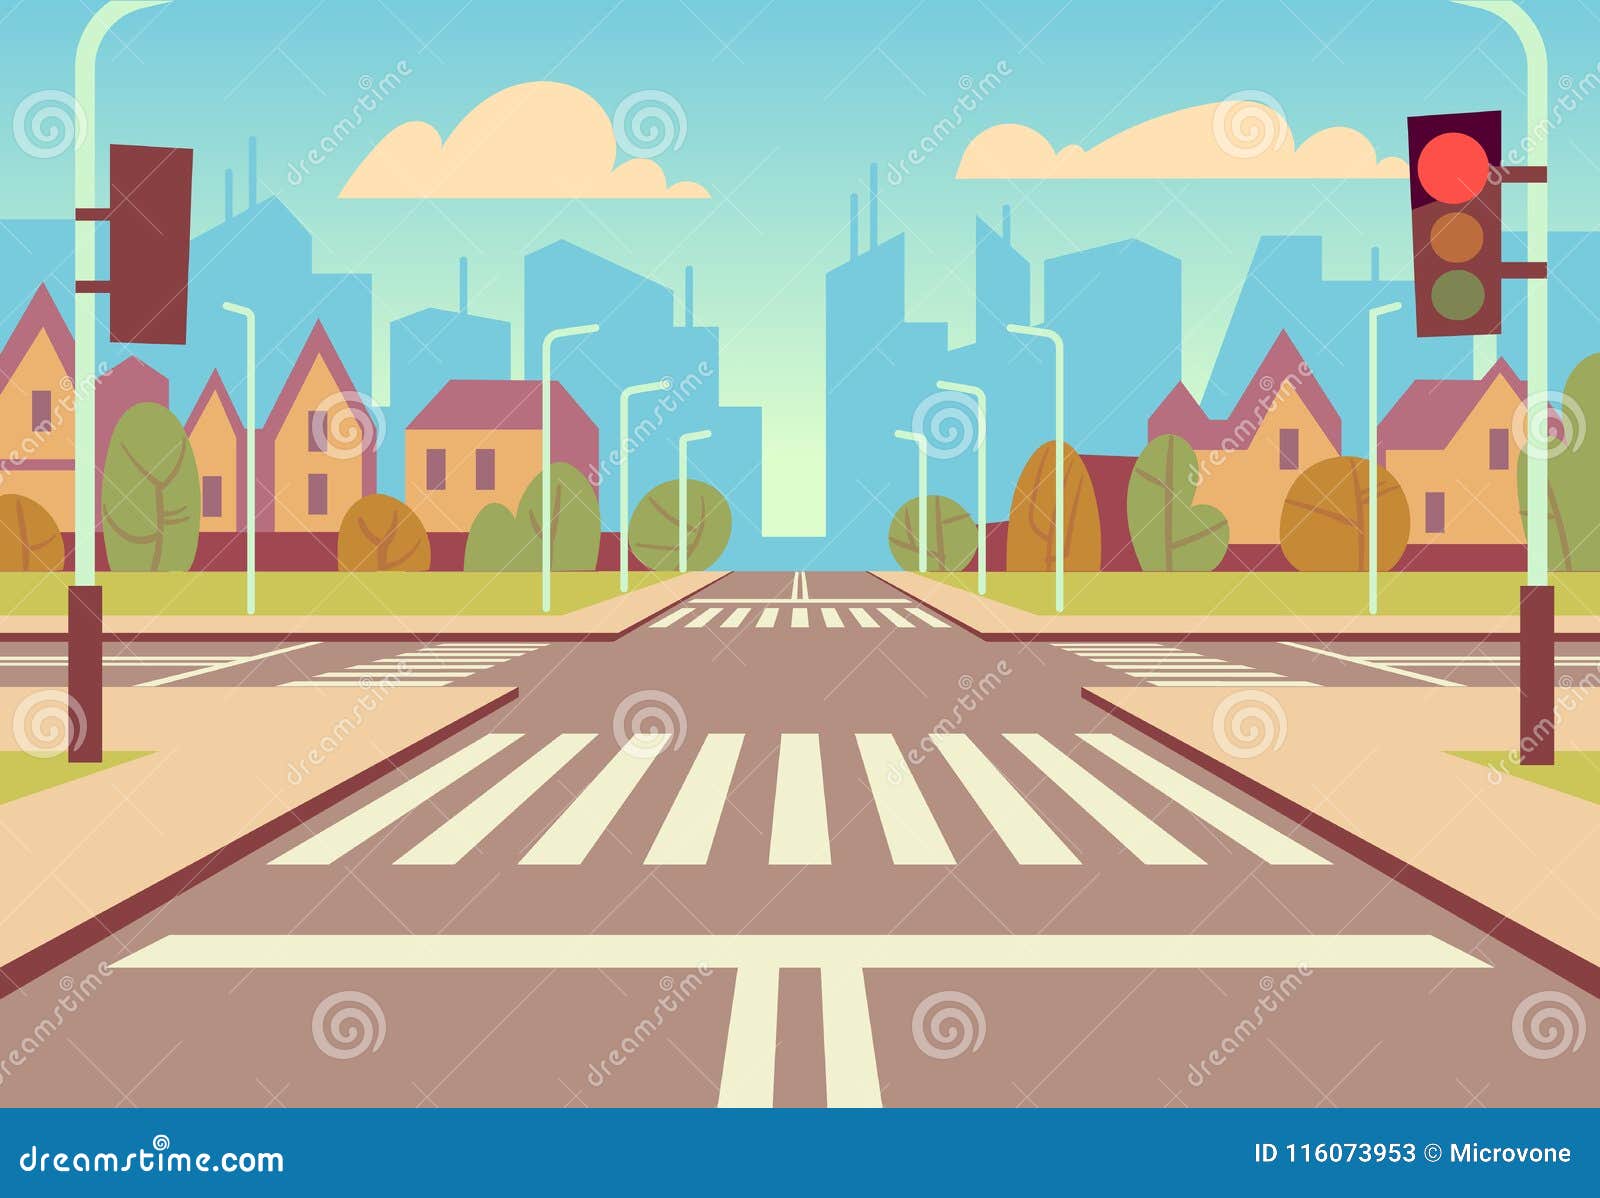 cartoon city crossroads with traffic lights, sidewalk, crosswalk and urban landscape. empty roads for car traffic 